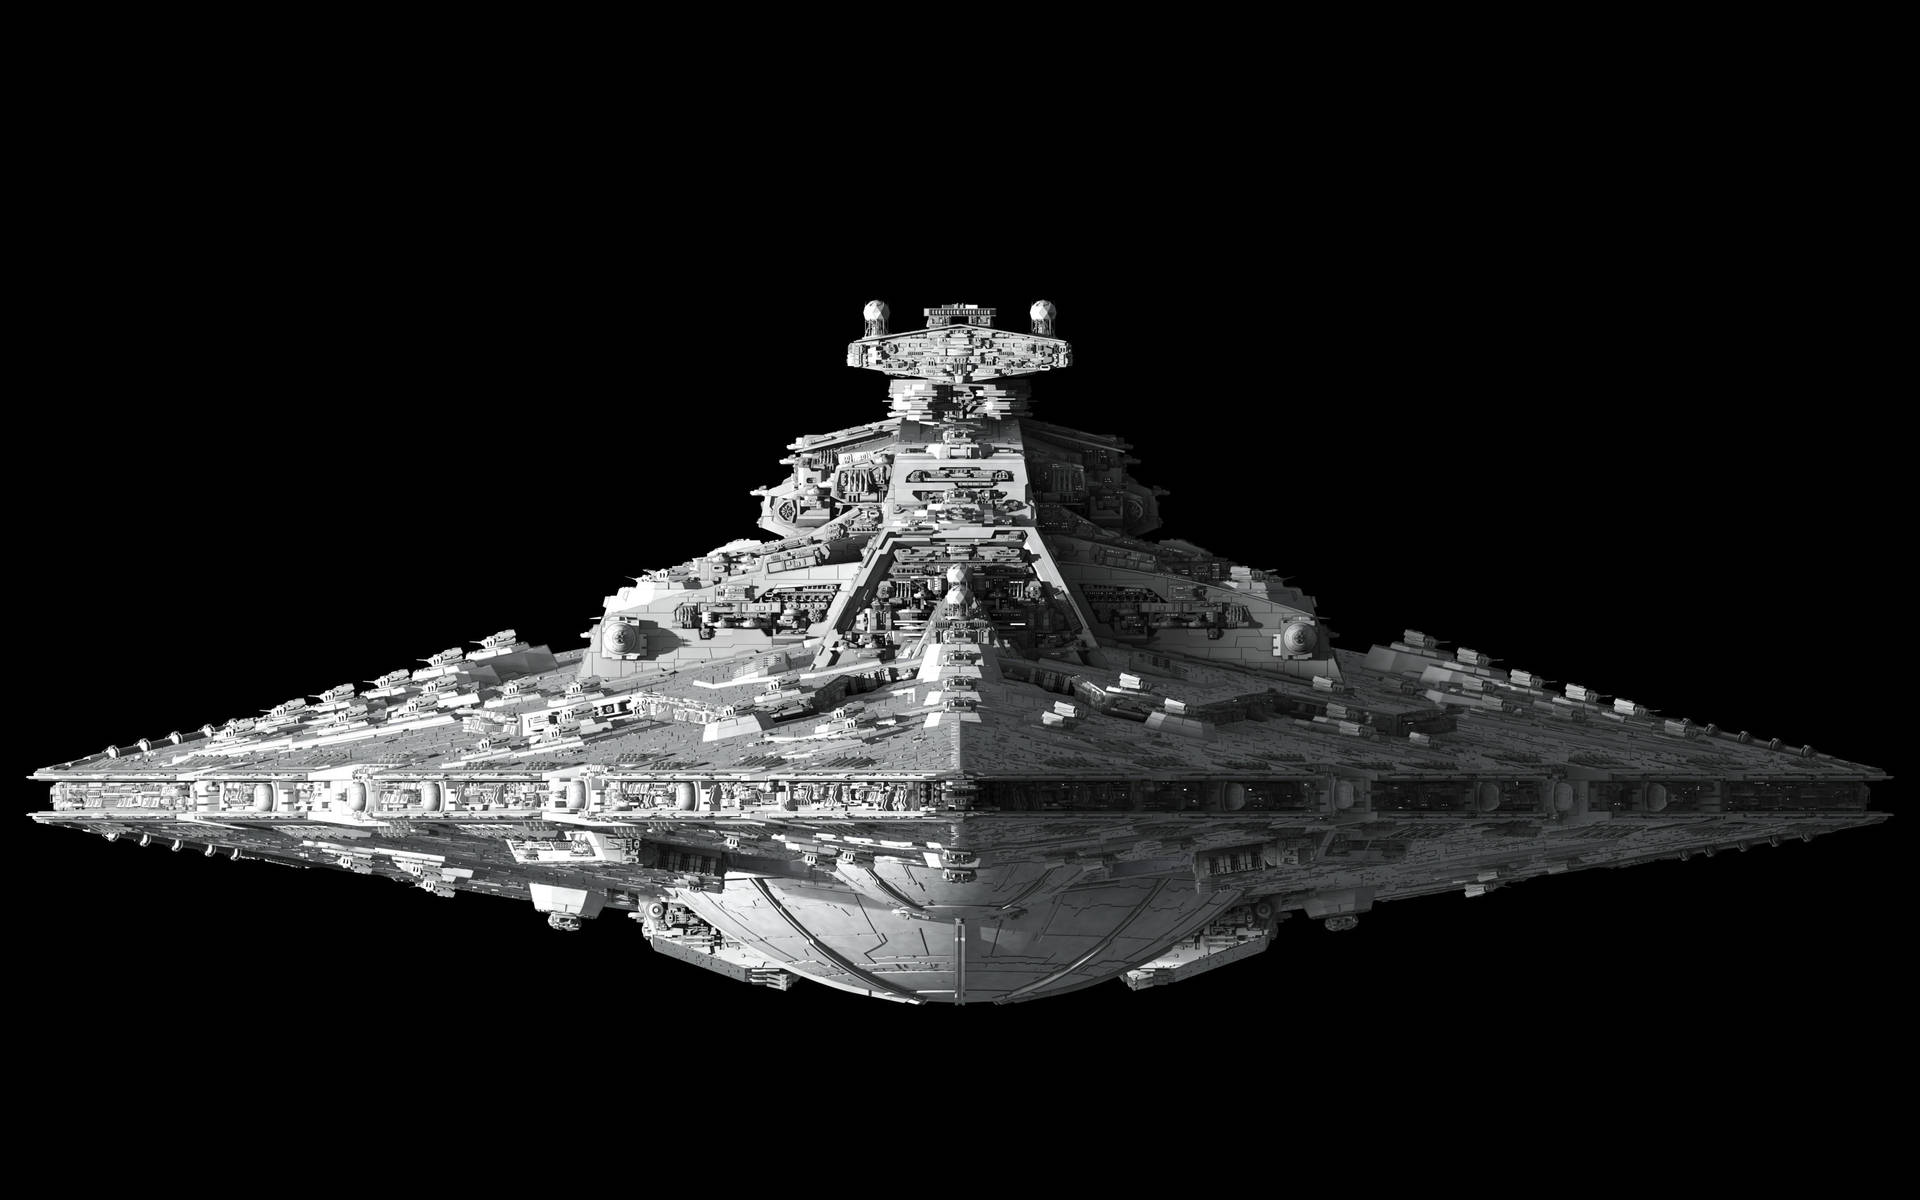 4k Star Wars Imperial Star Destroyer Wallpaper